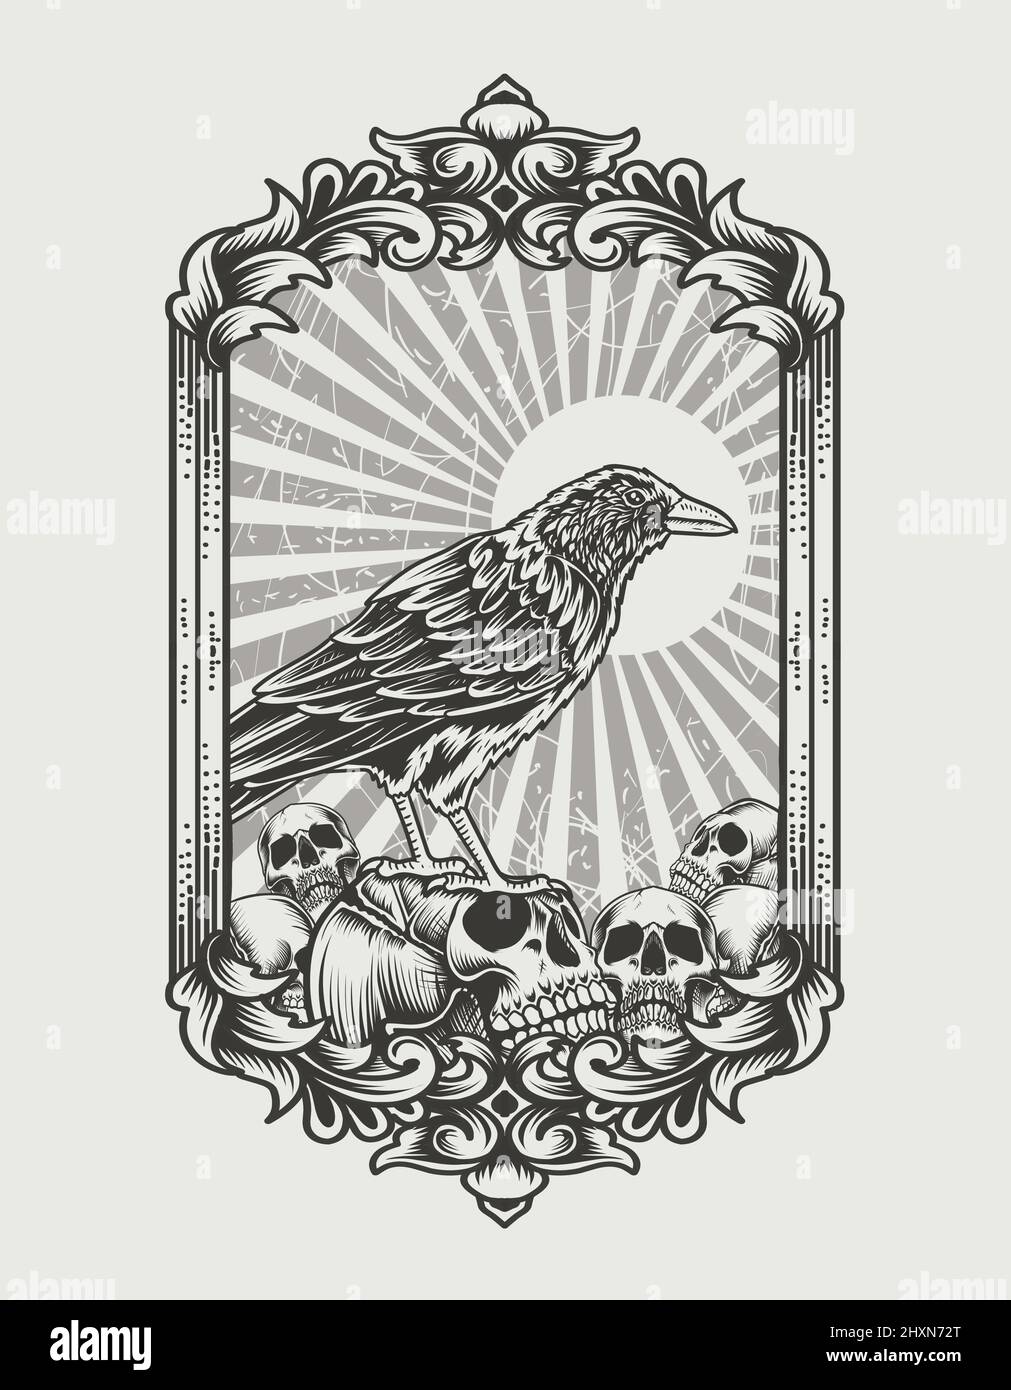 illustration crow bird with skull head monochrome style Stock Vector